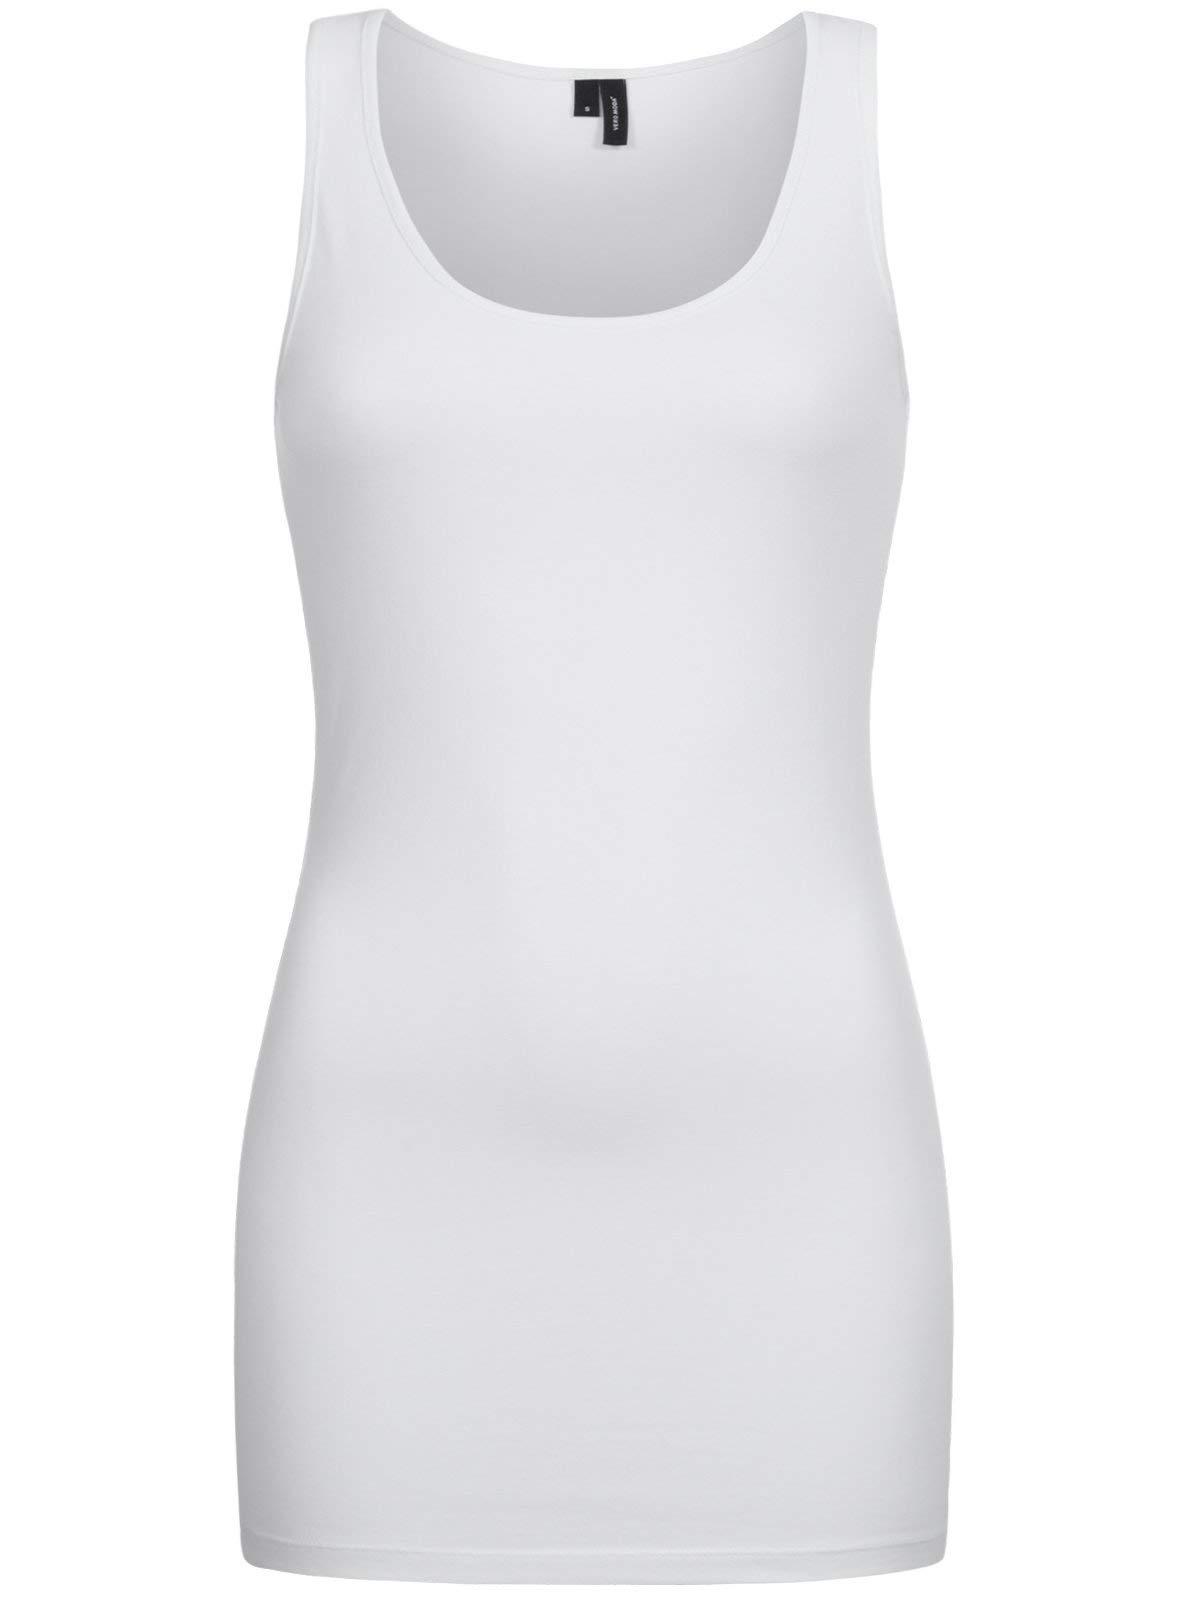 Vero Moda Vmmaxi My Soft Long Tank Top Noos Vest in Bright White (White) -  Save 36% - Lyst